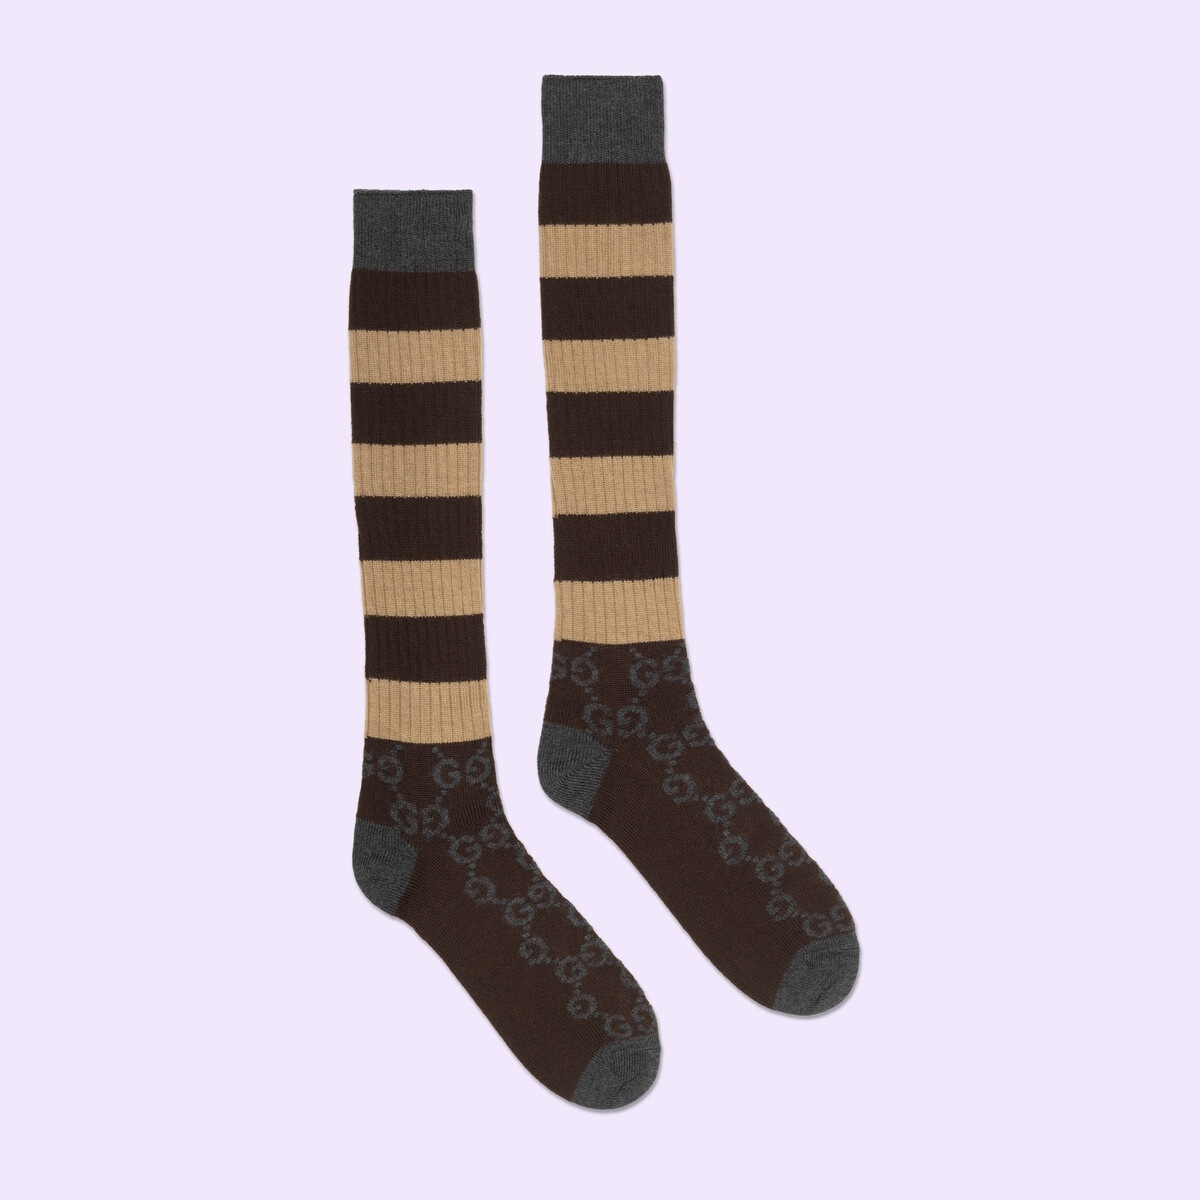 GG striped wool socks - 2